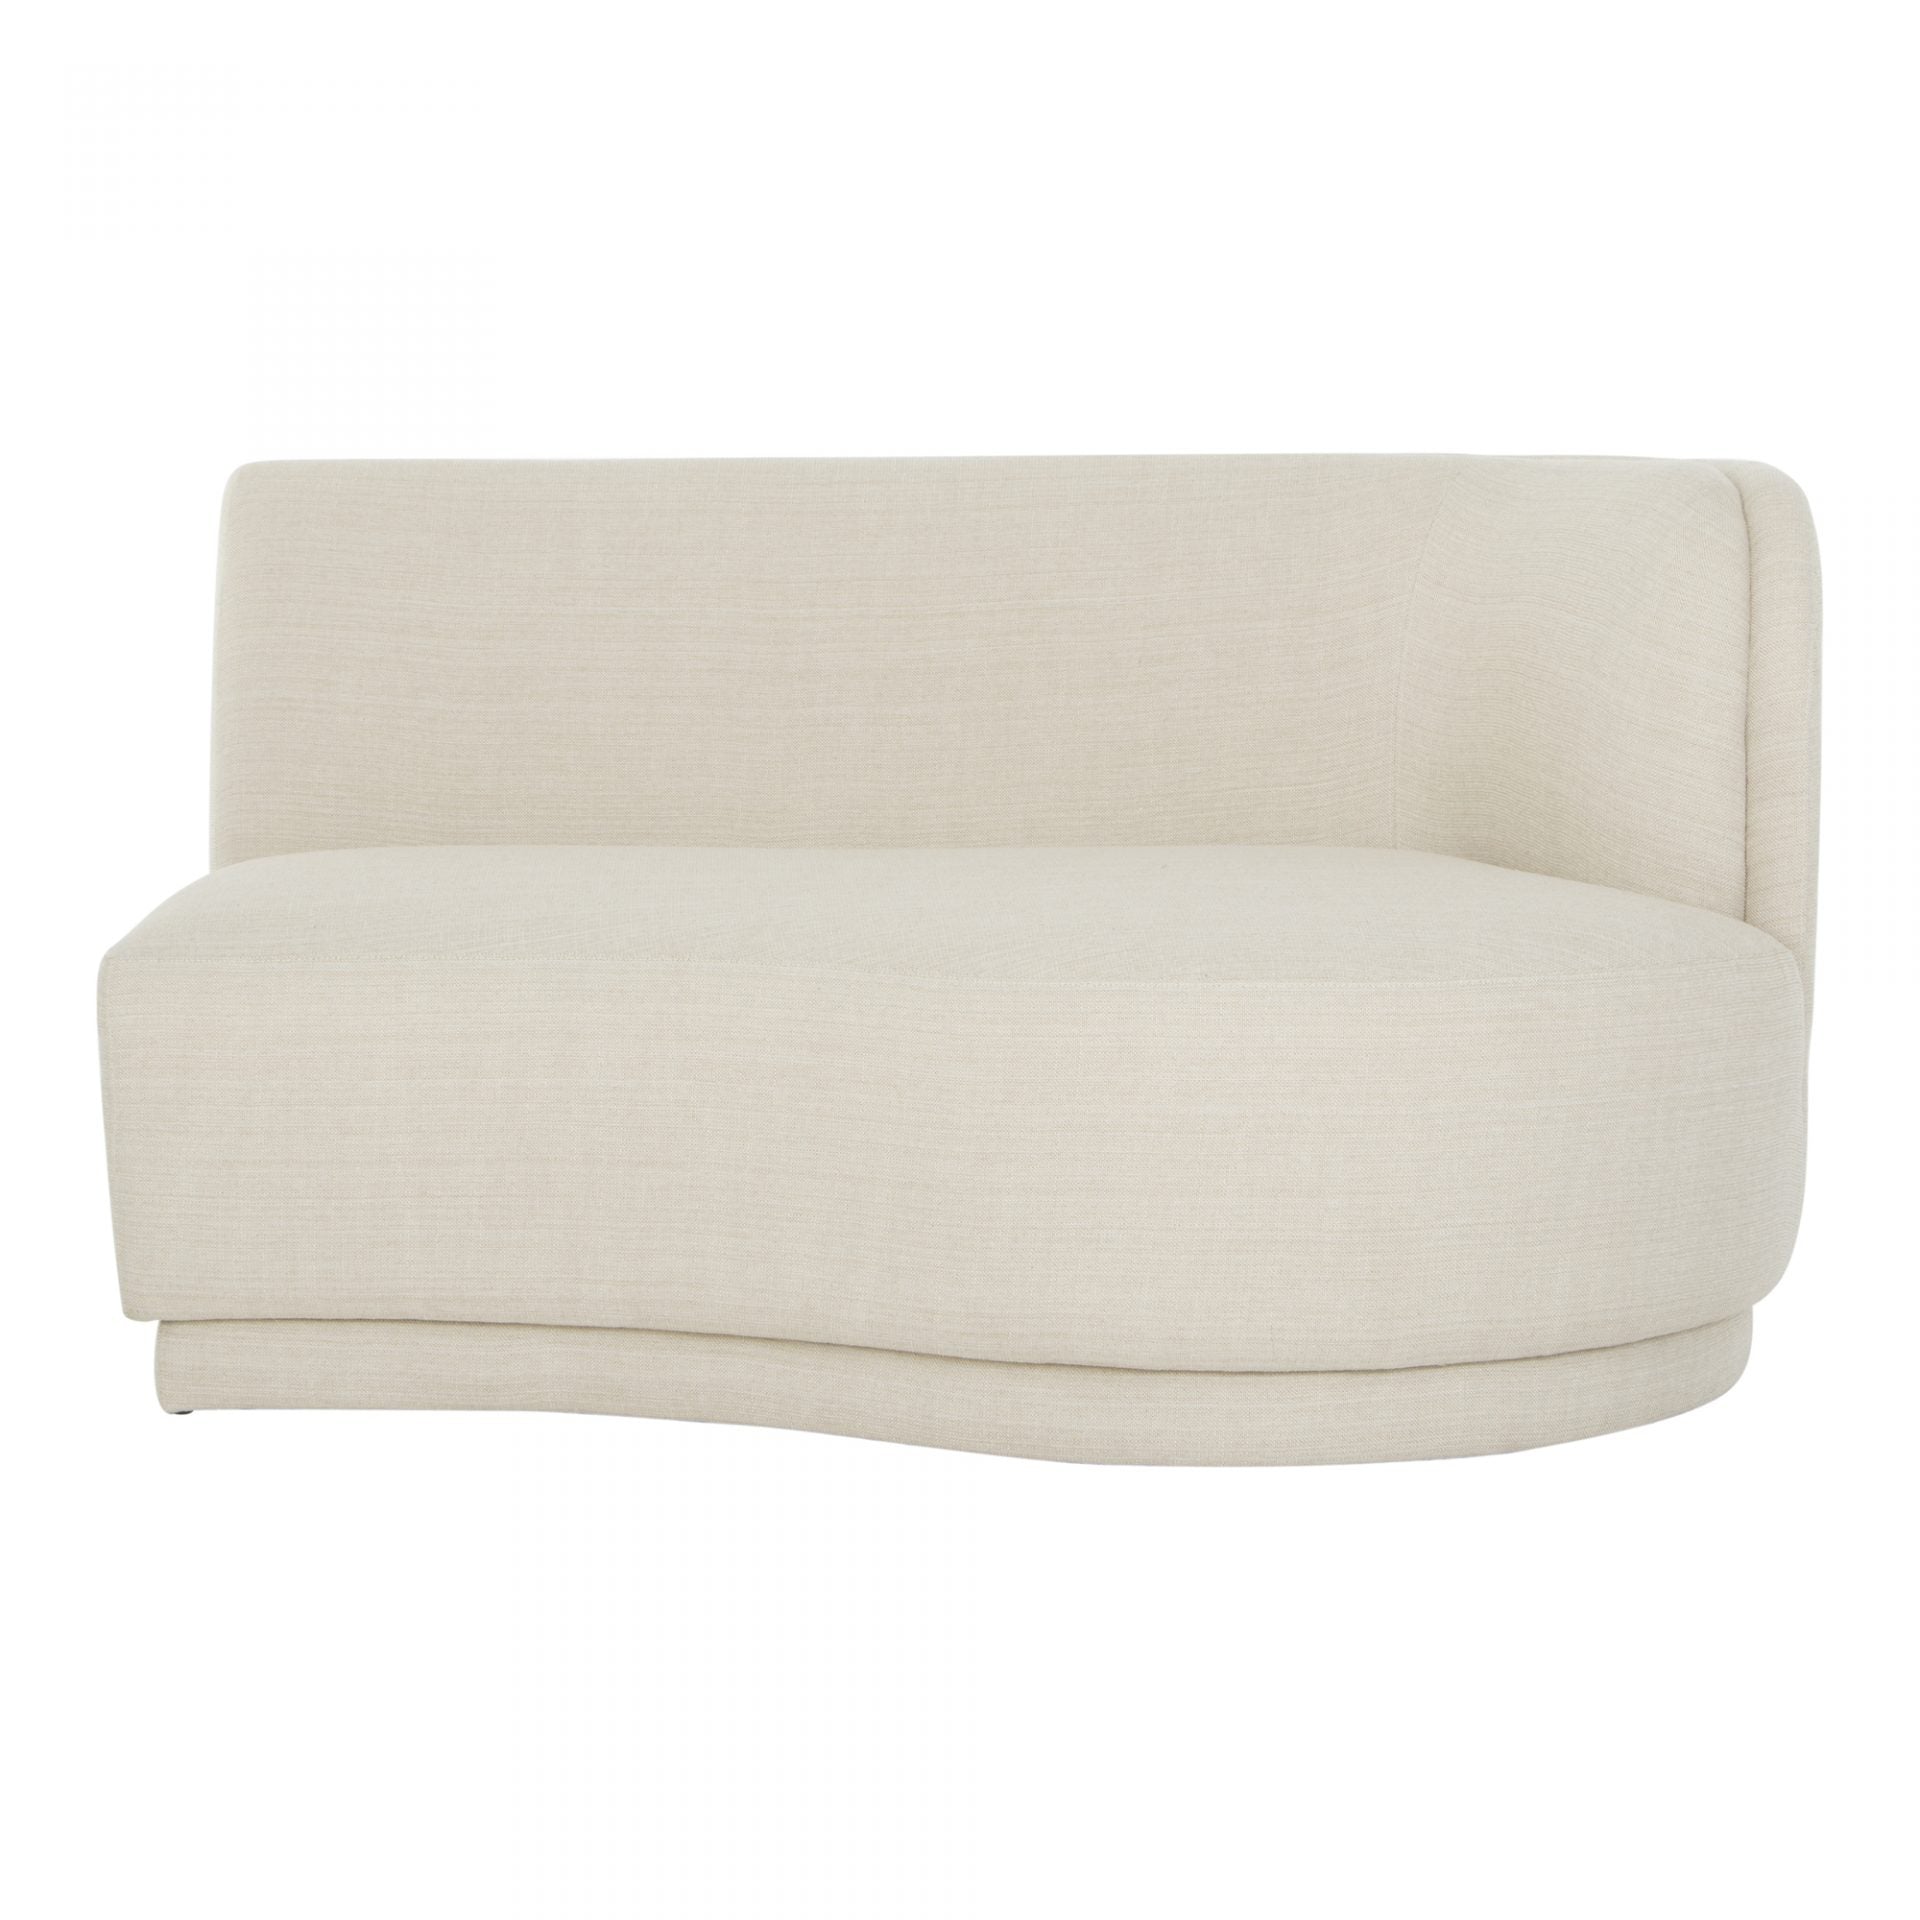 Yoon 2 Seat Sofa Right Cream JM-1018-05